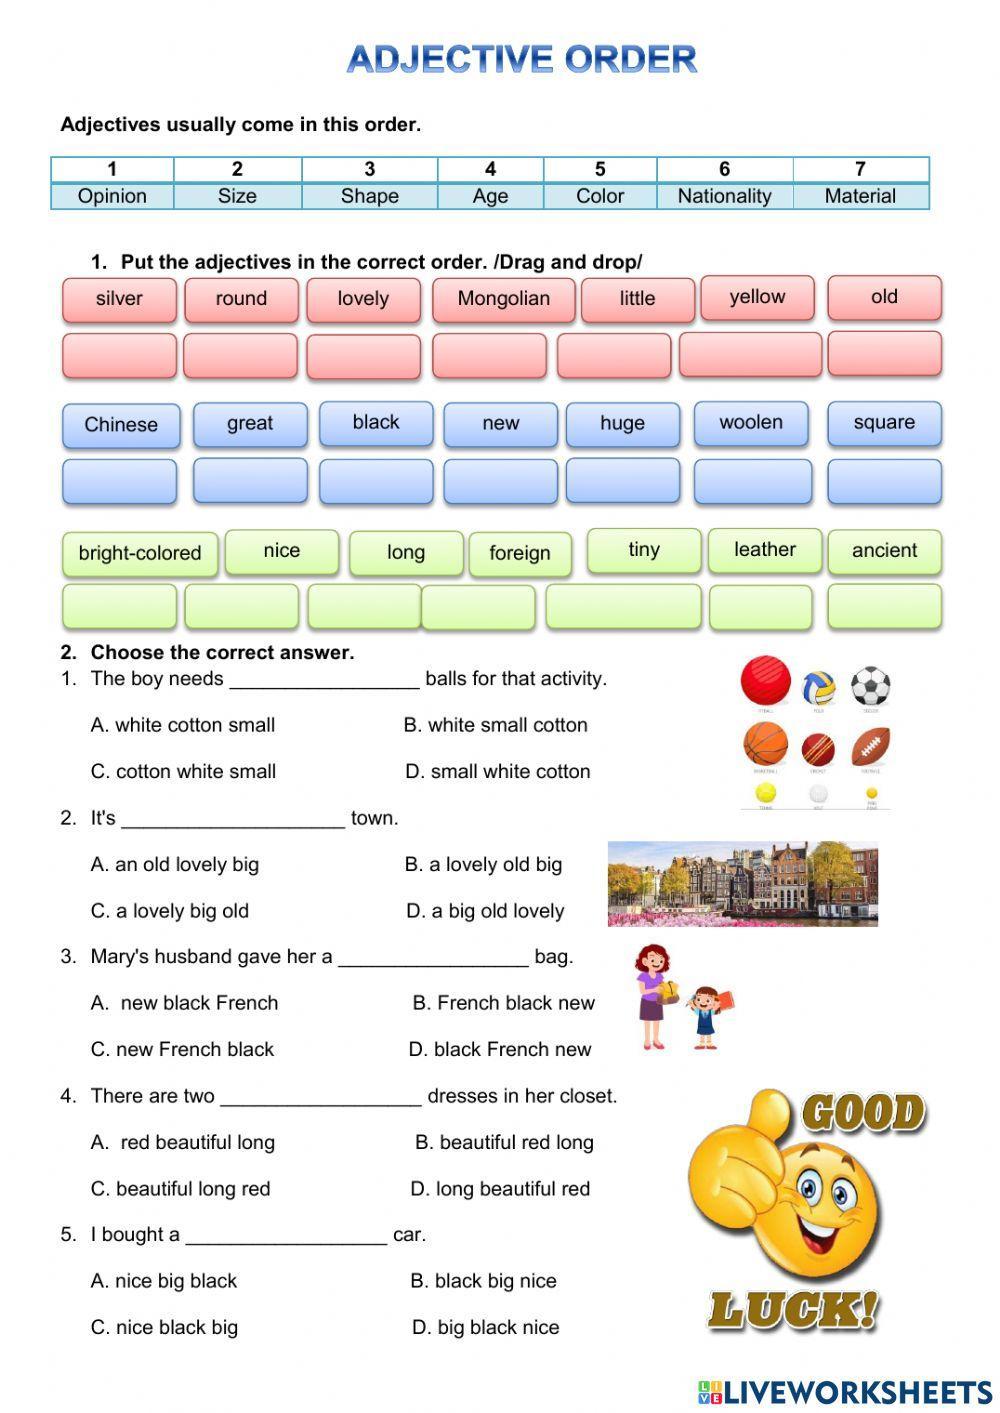 adjective-order-exercise-for-grade-9-live-worksheets